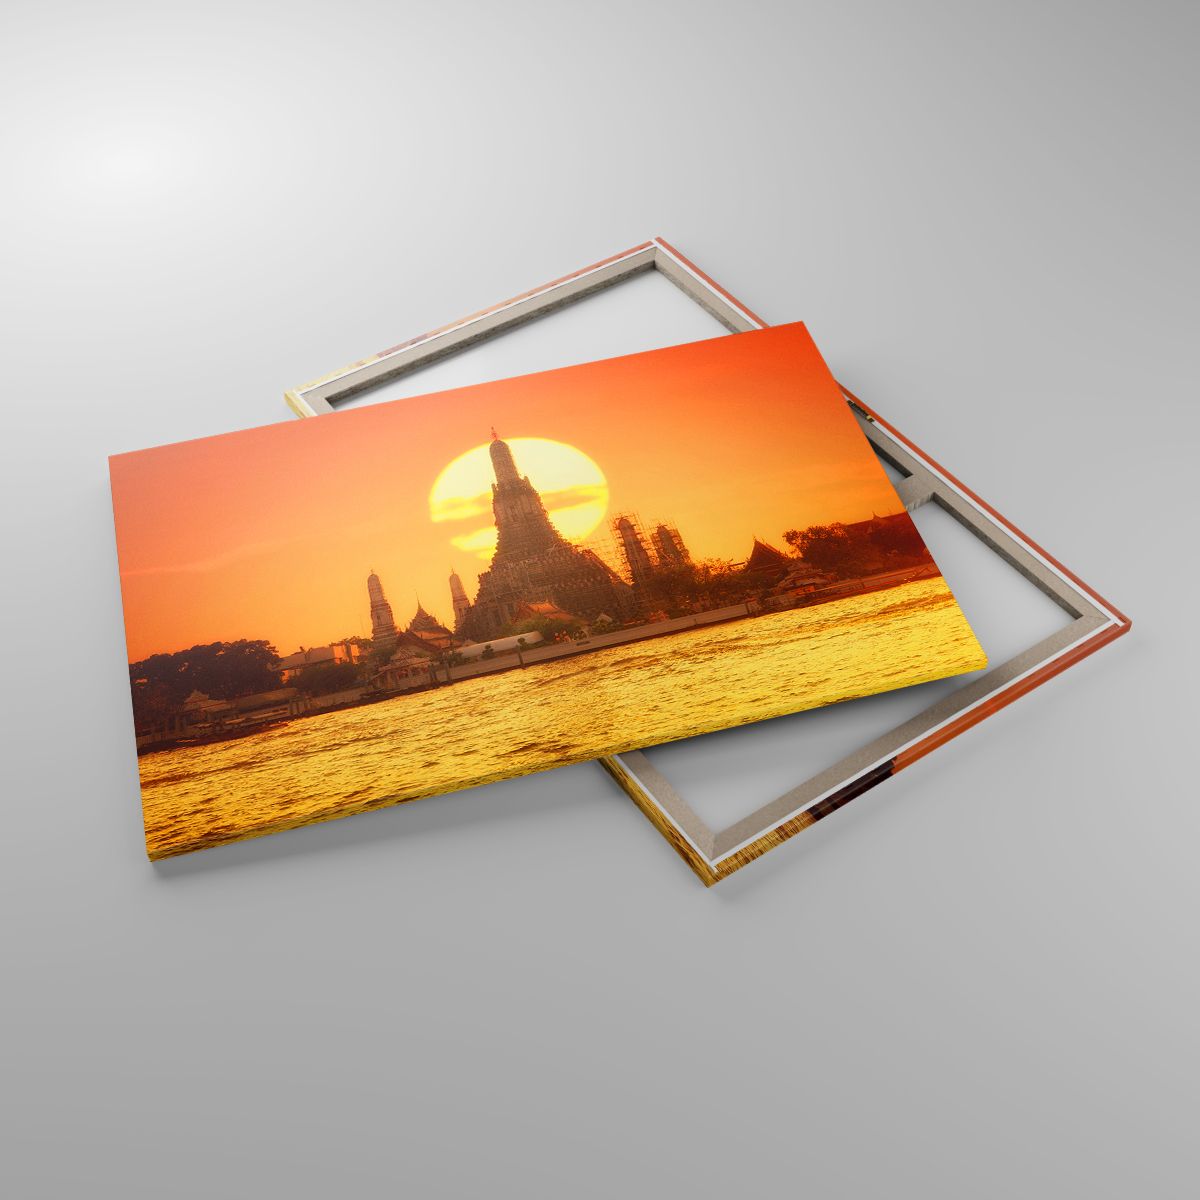 Leinwandbild Bangkok, Leinwandbild Tempel Der Morgenröte, Leinwandbild Thailand, Leinwandbild Sonne, Leinwandbild Buddhismus